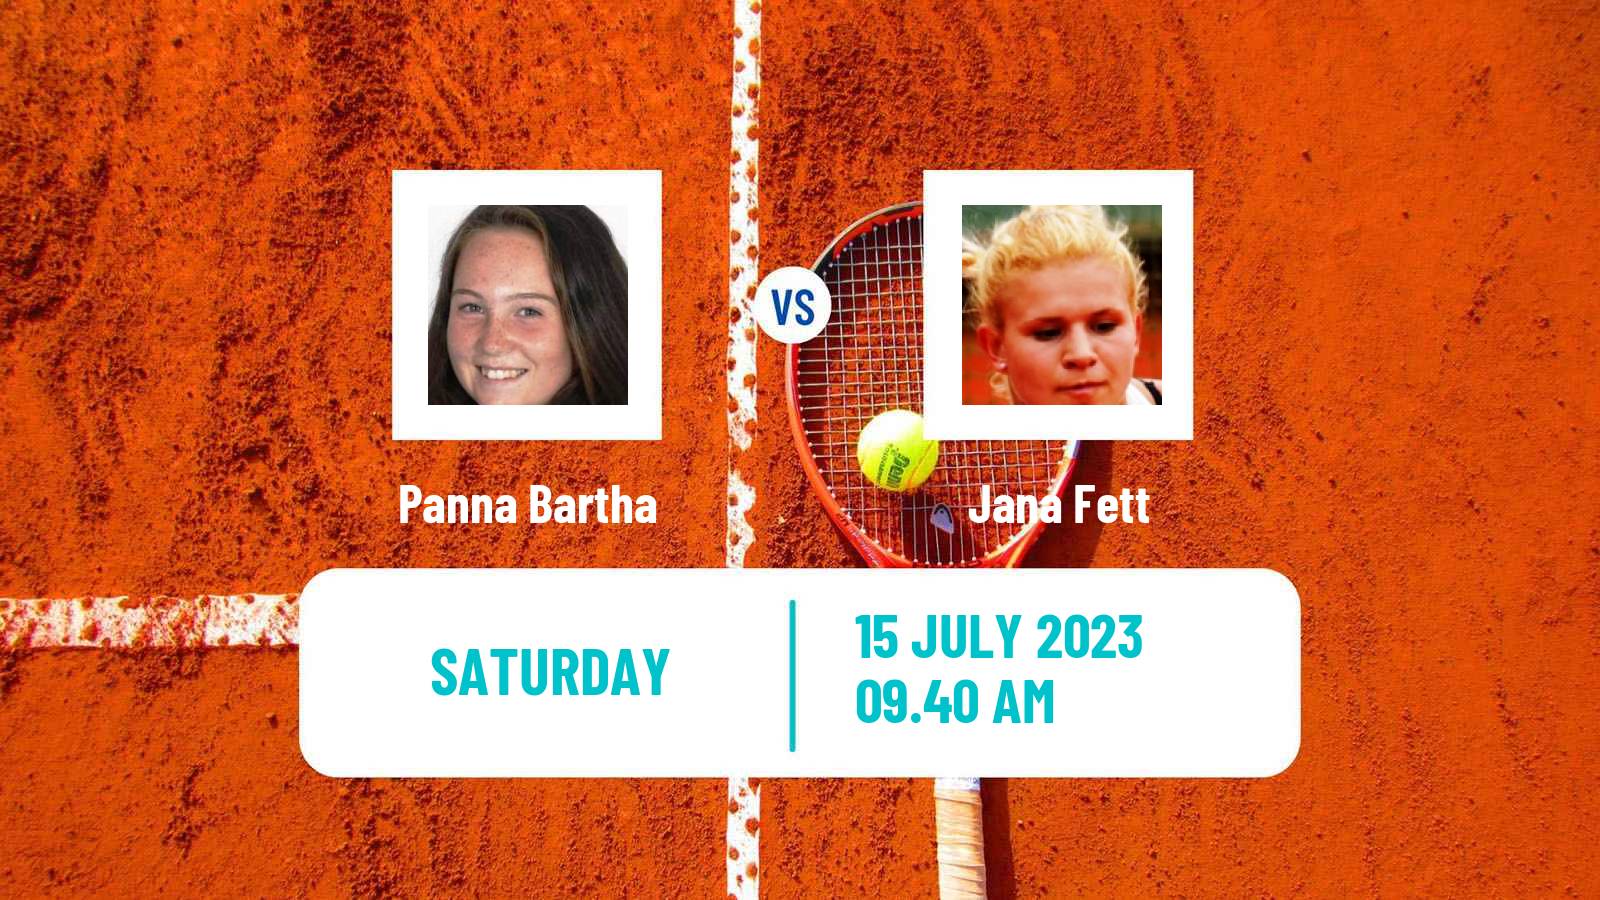 Tennis WTA Budapest Panna Bartha - Jana Fett